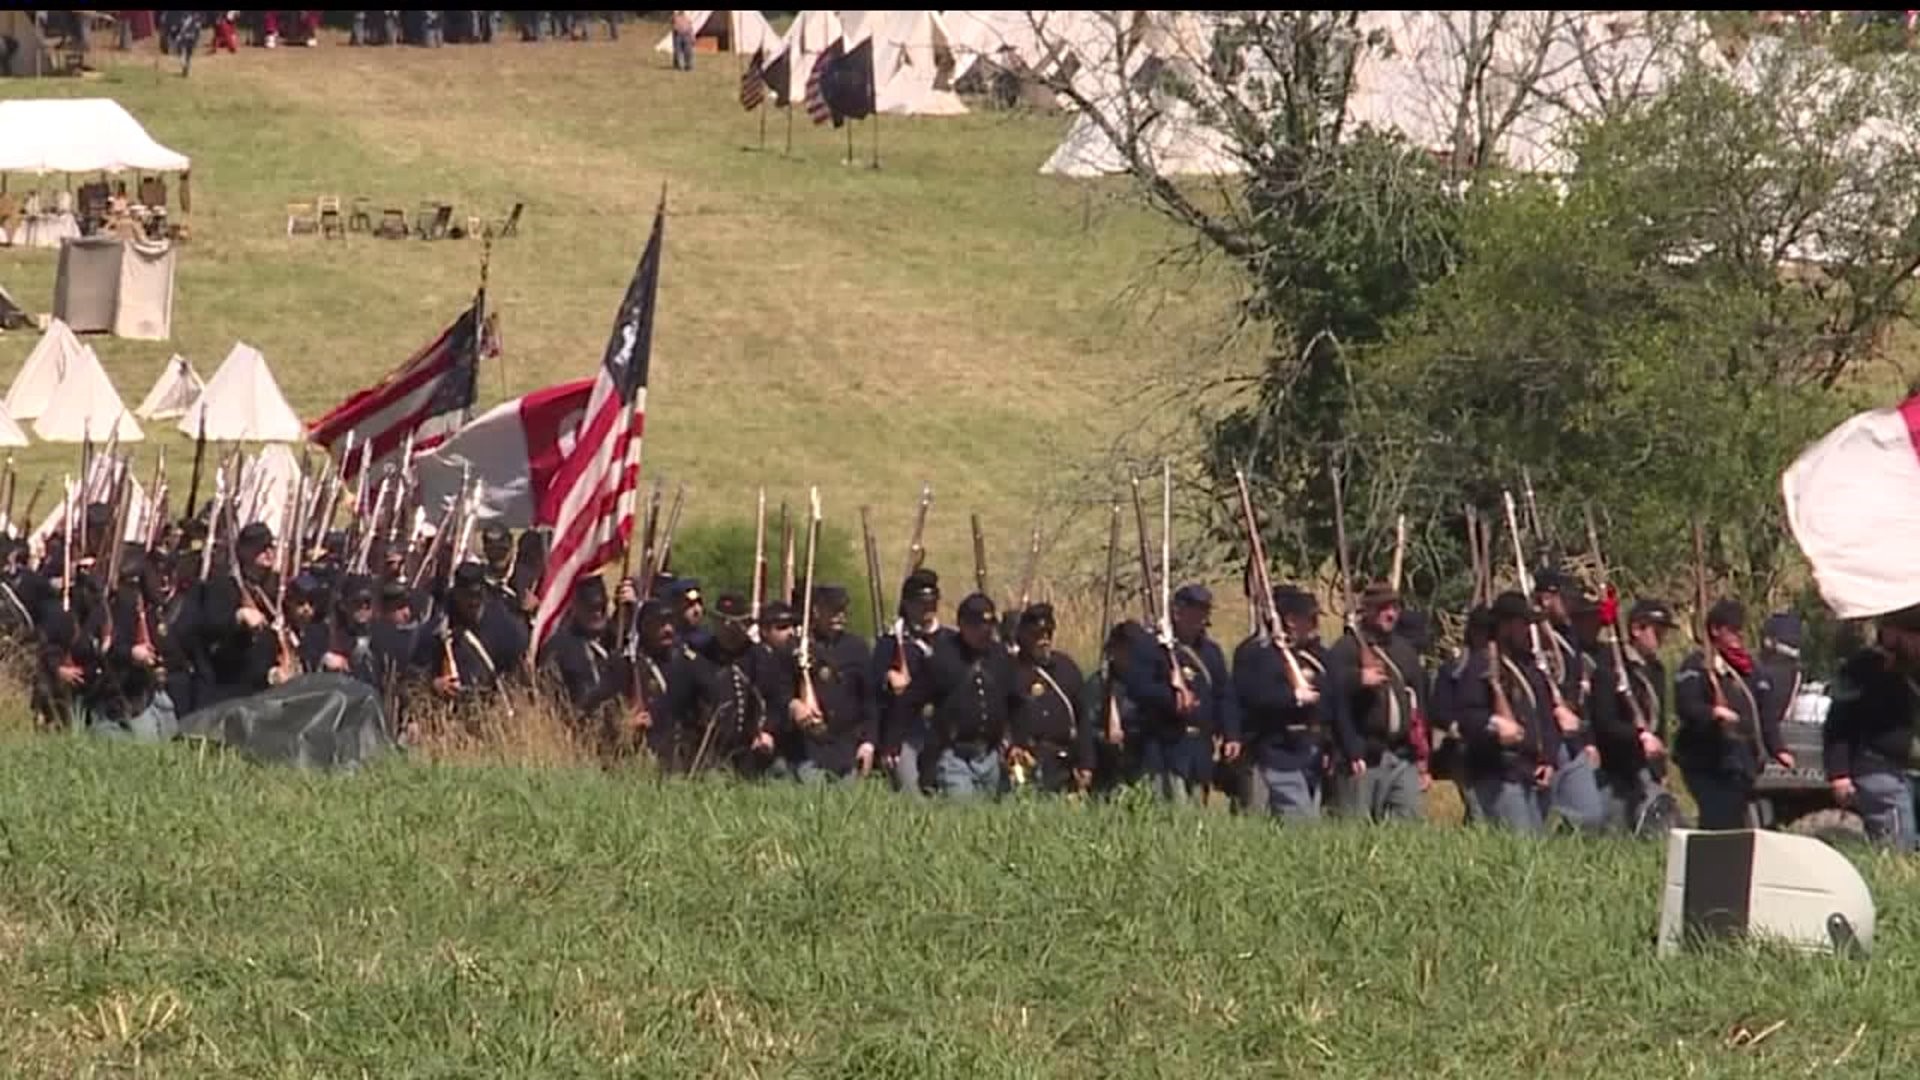 155th Anniversary of the Battle of Gettysburg Reenactments held in